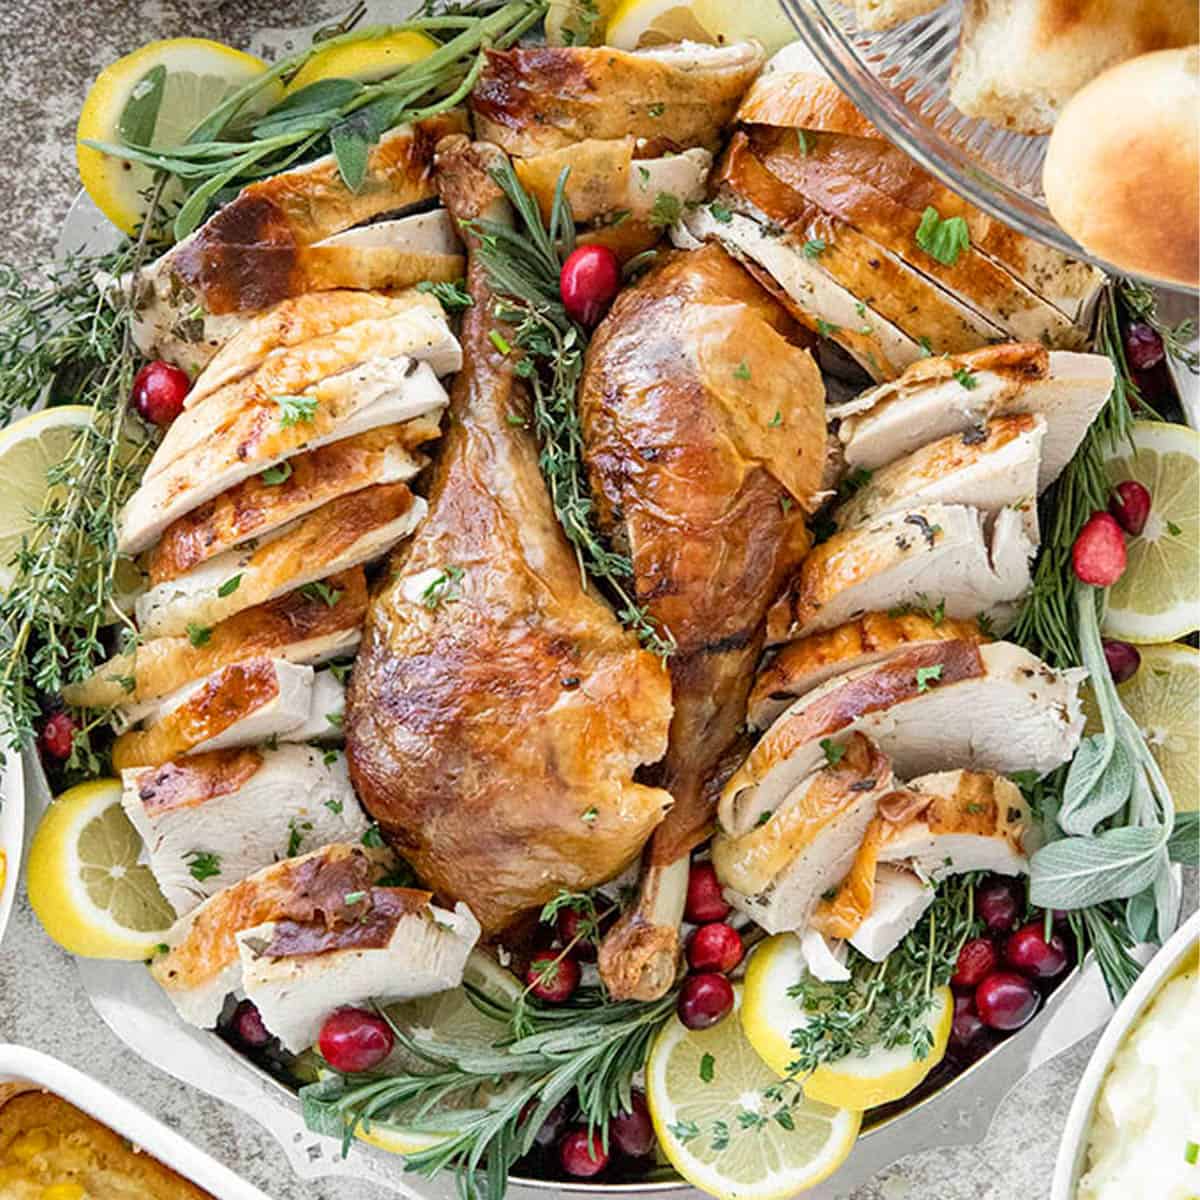 Roast Turkey In a Bag - Garnish & Glaze